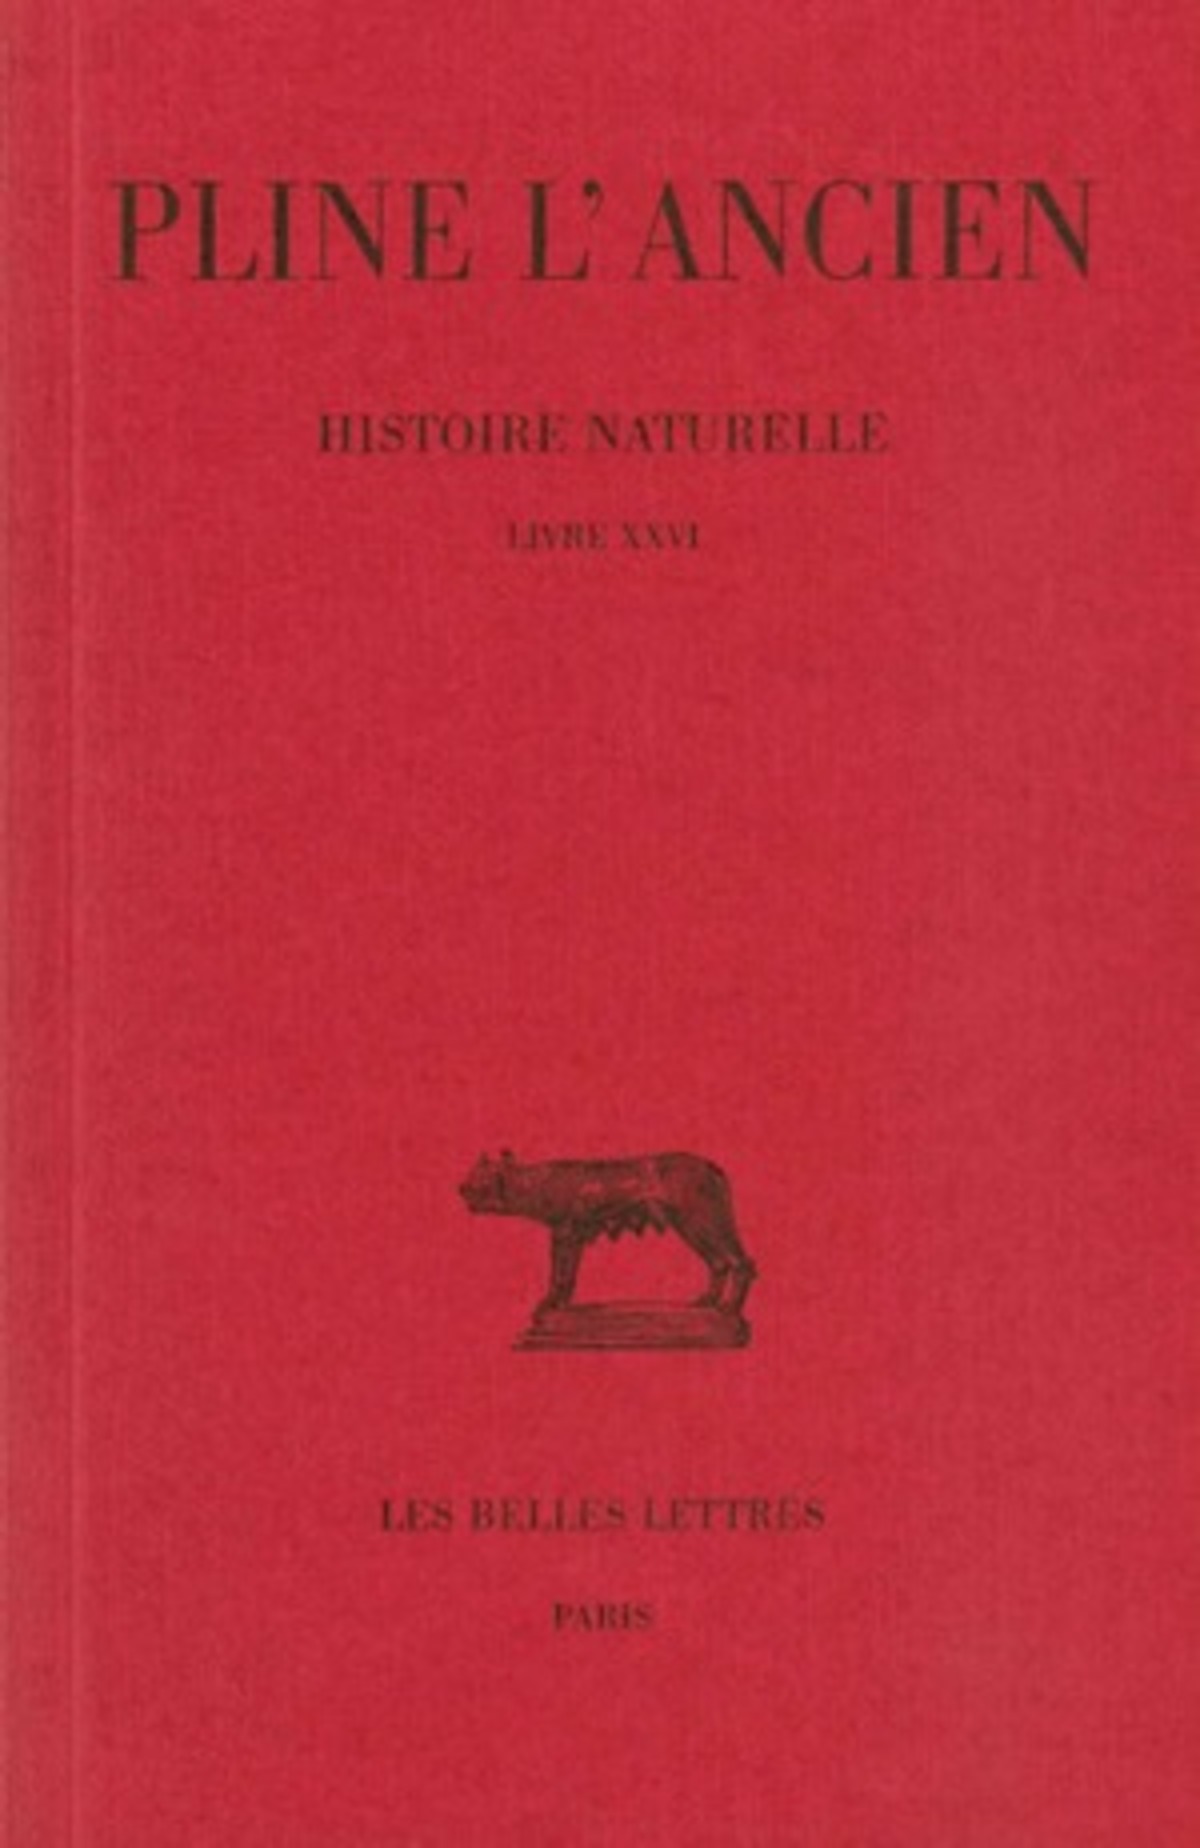 Histoire naturelle. Livre XXVI